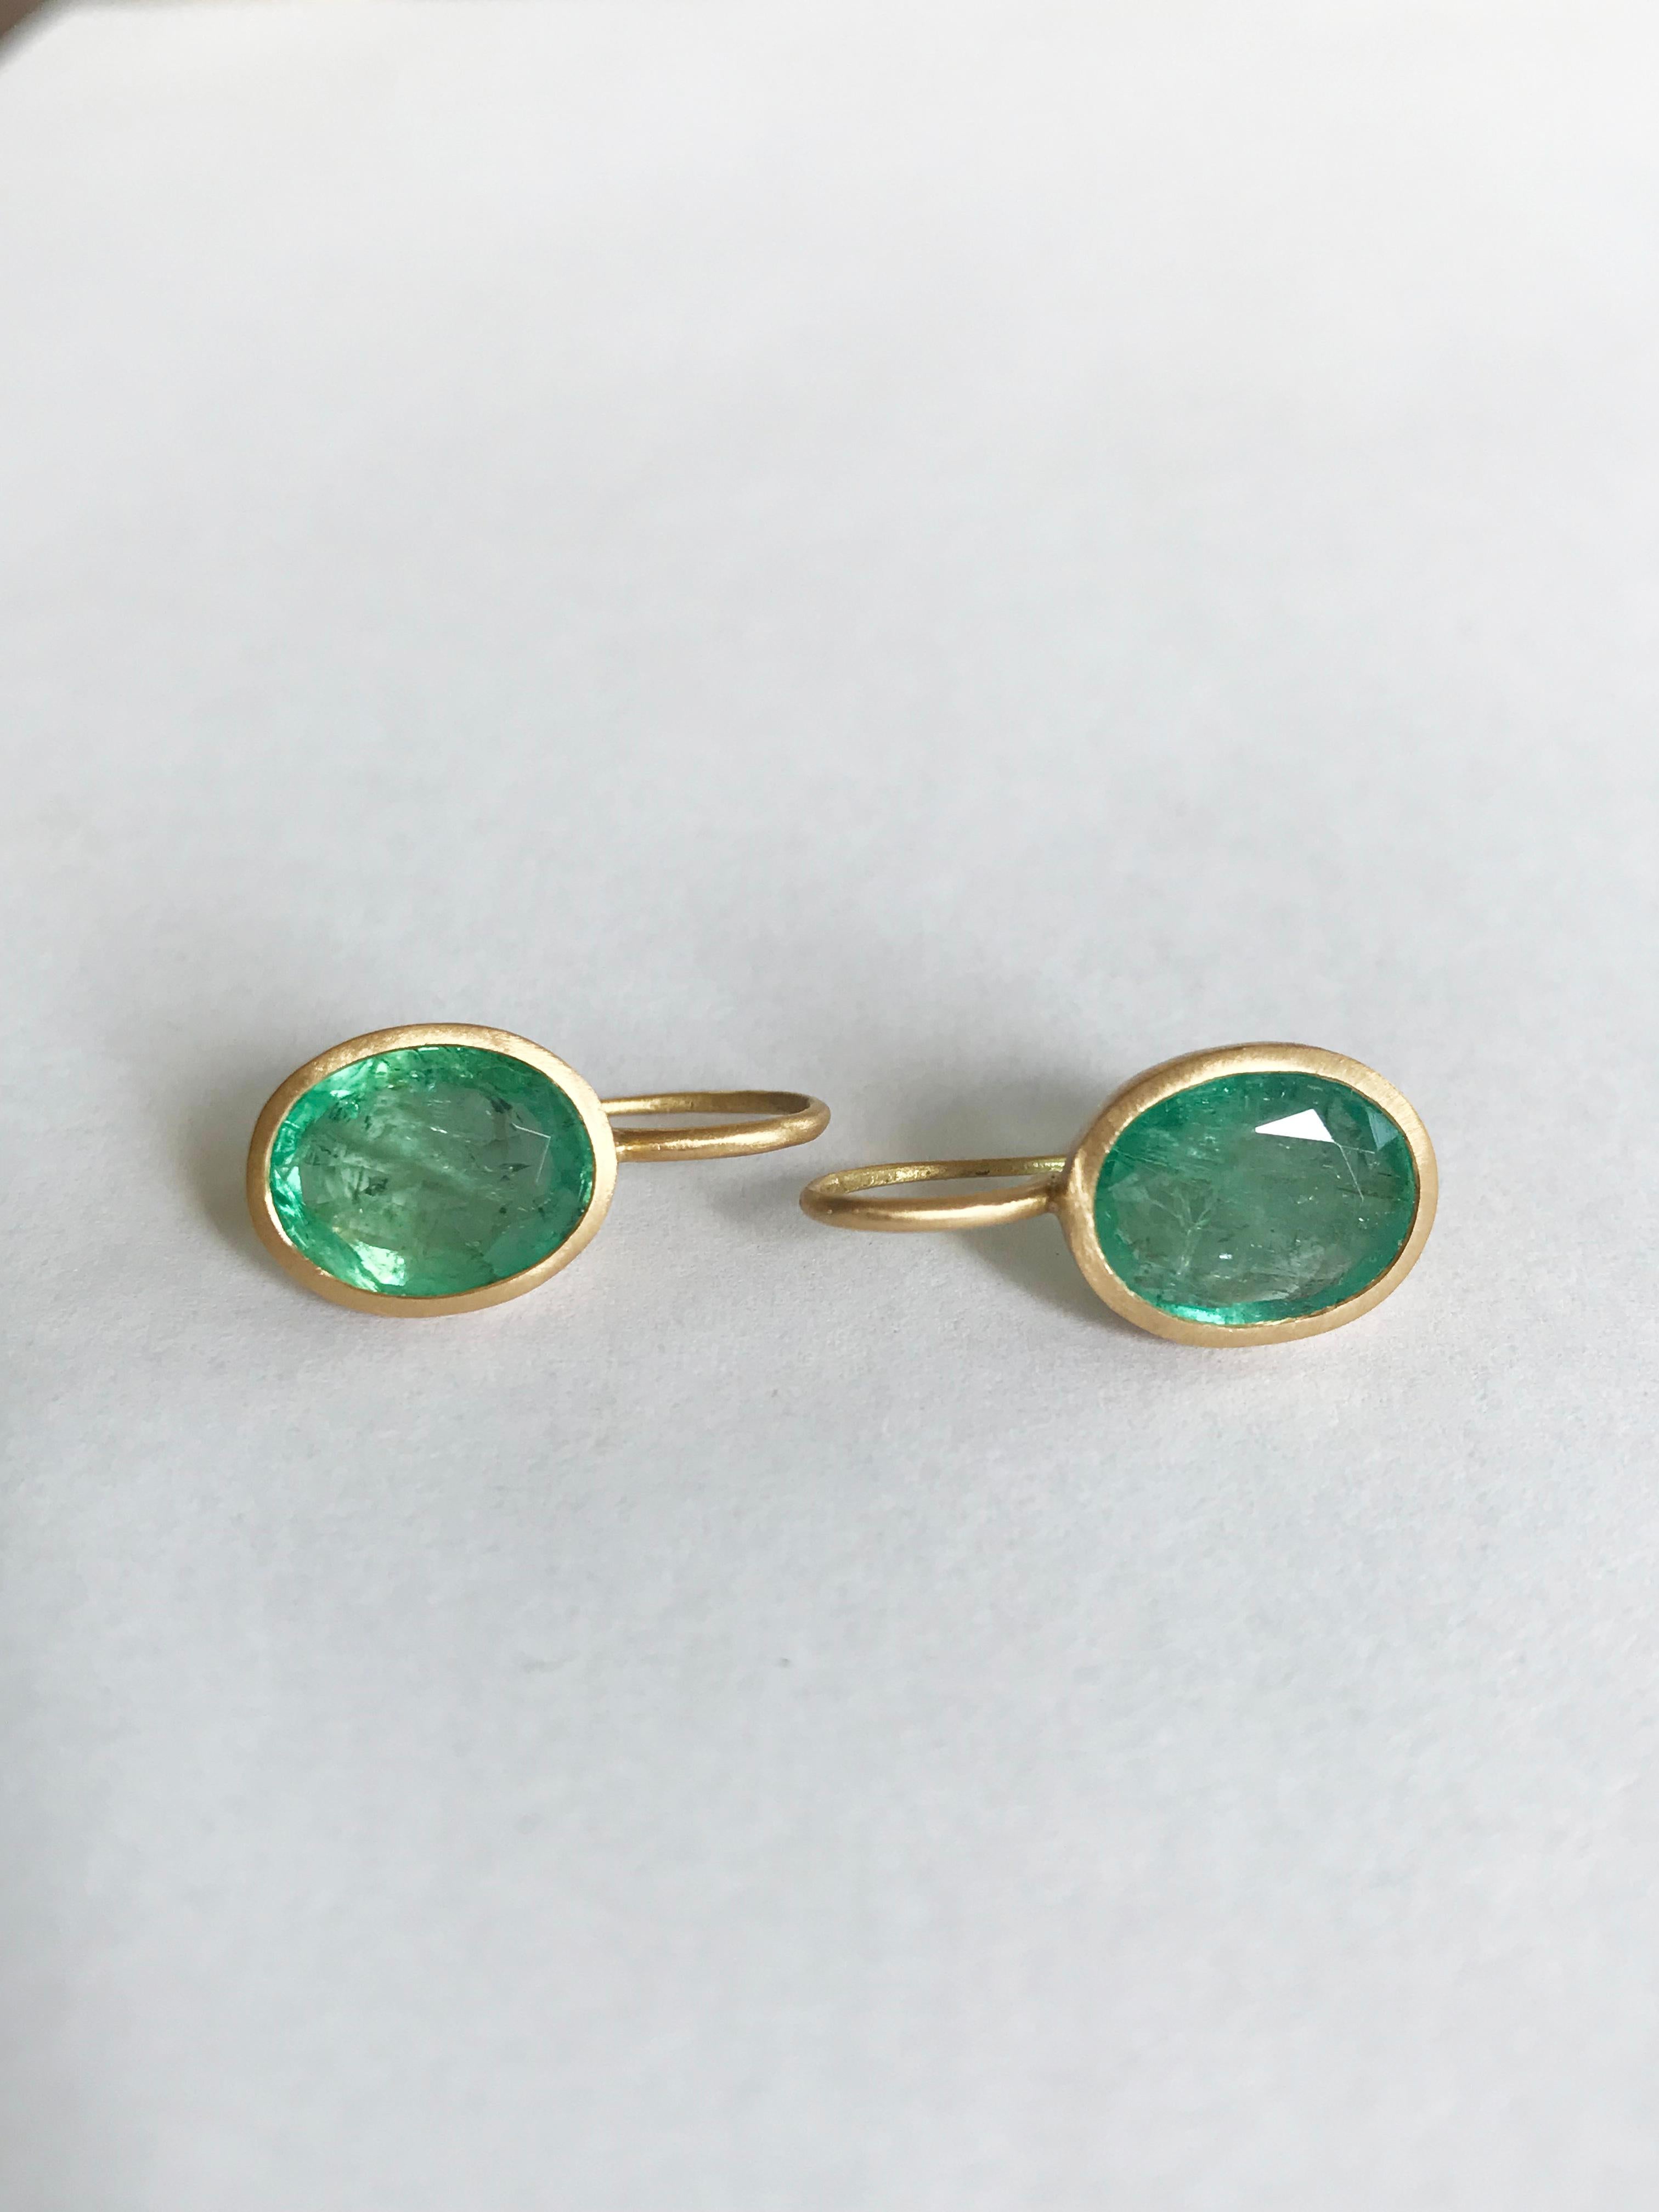 Dalben 6, 4 Carat Emerald Yellow Gold Earrings 10